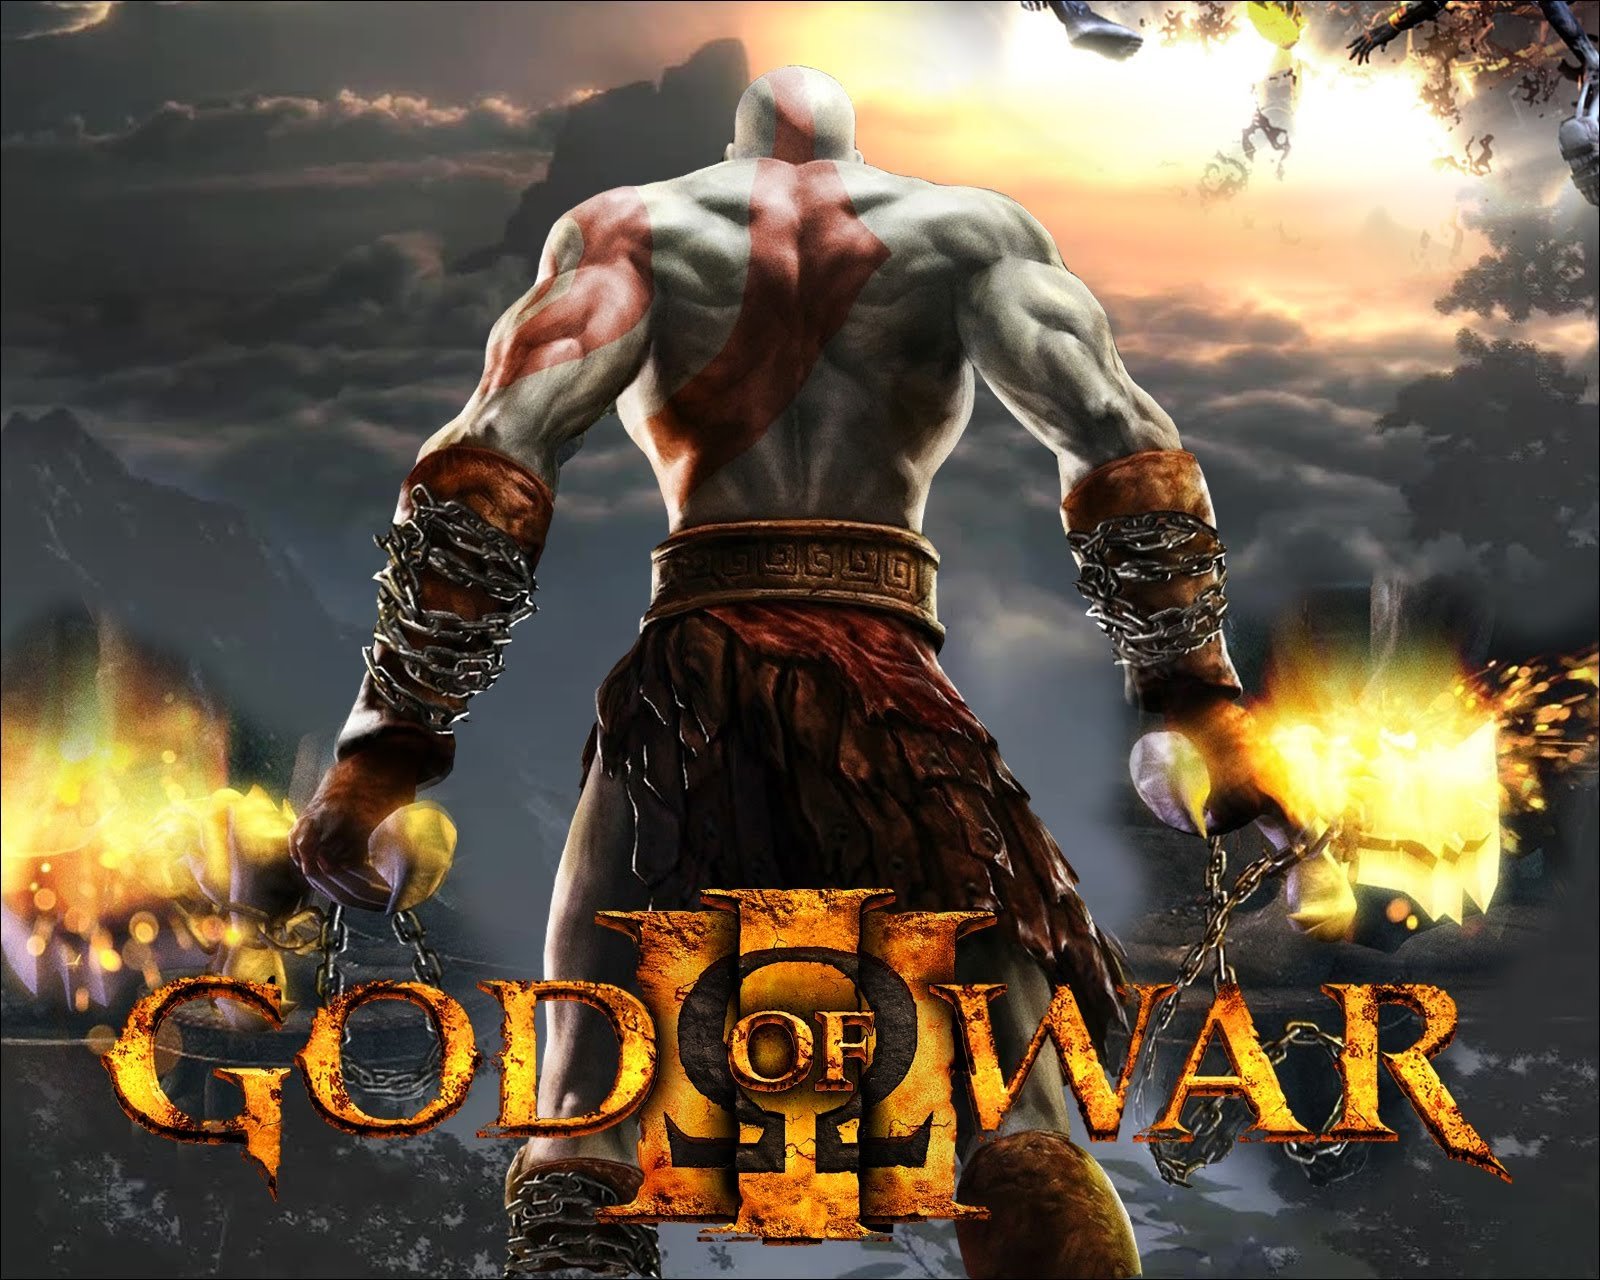 god of war 2 cheat hacks pnach file download